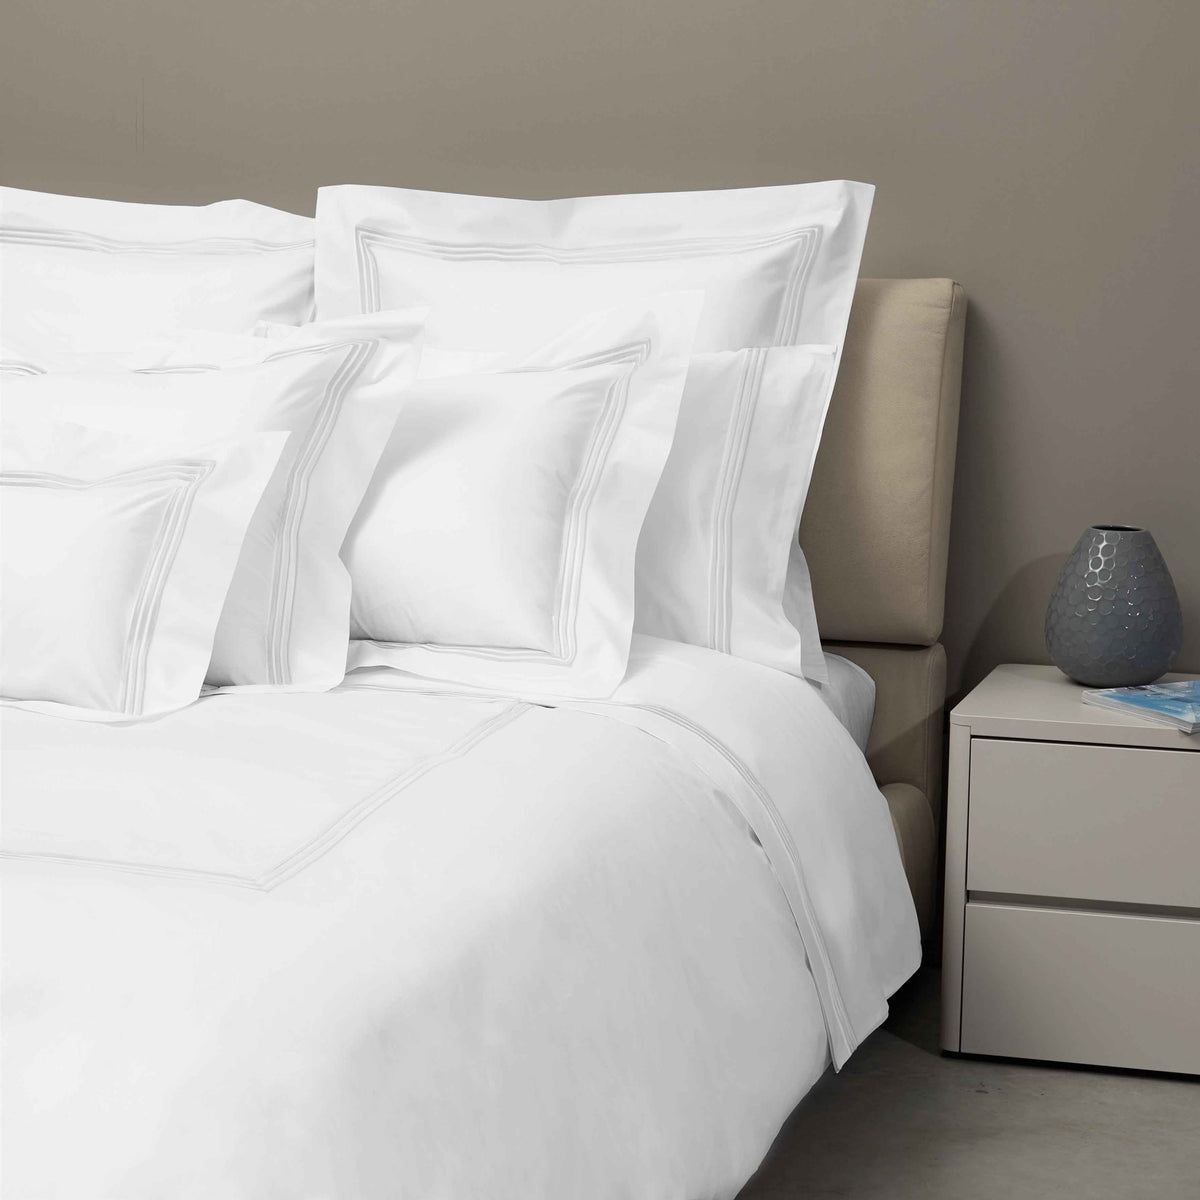 Bed Dressed in Signoria Platinum Percale Bedding in White/White Color